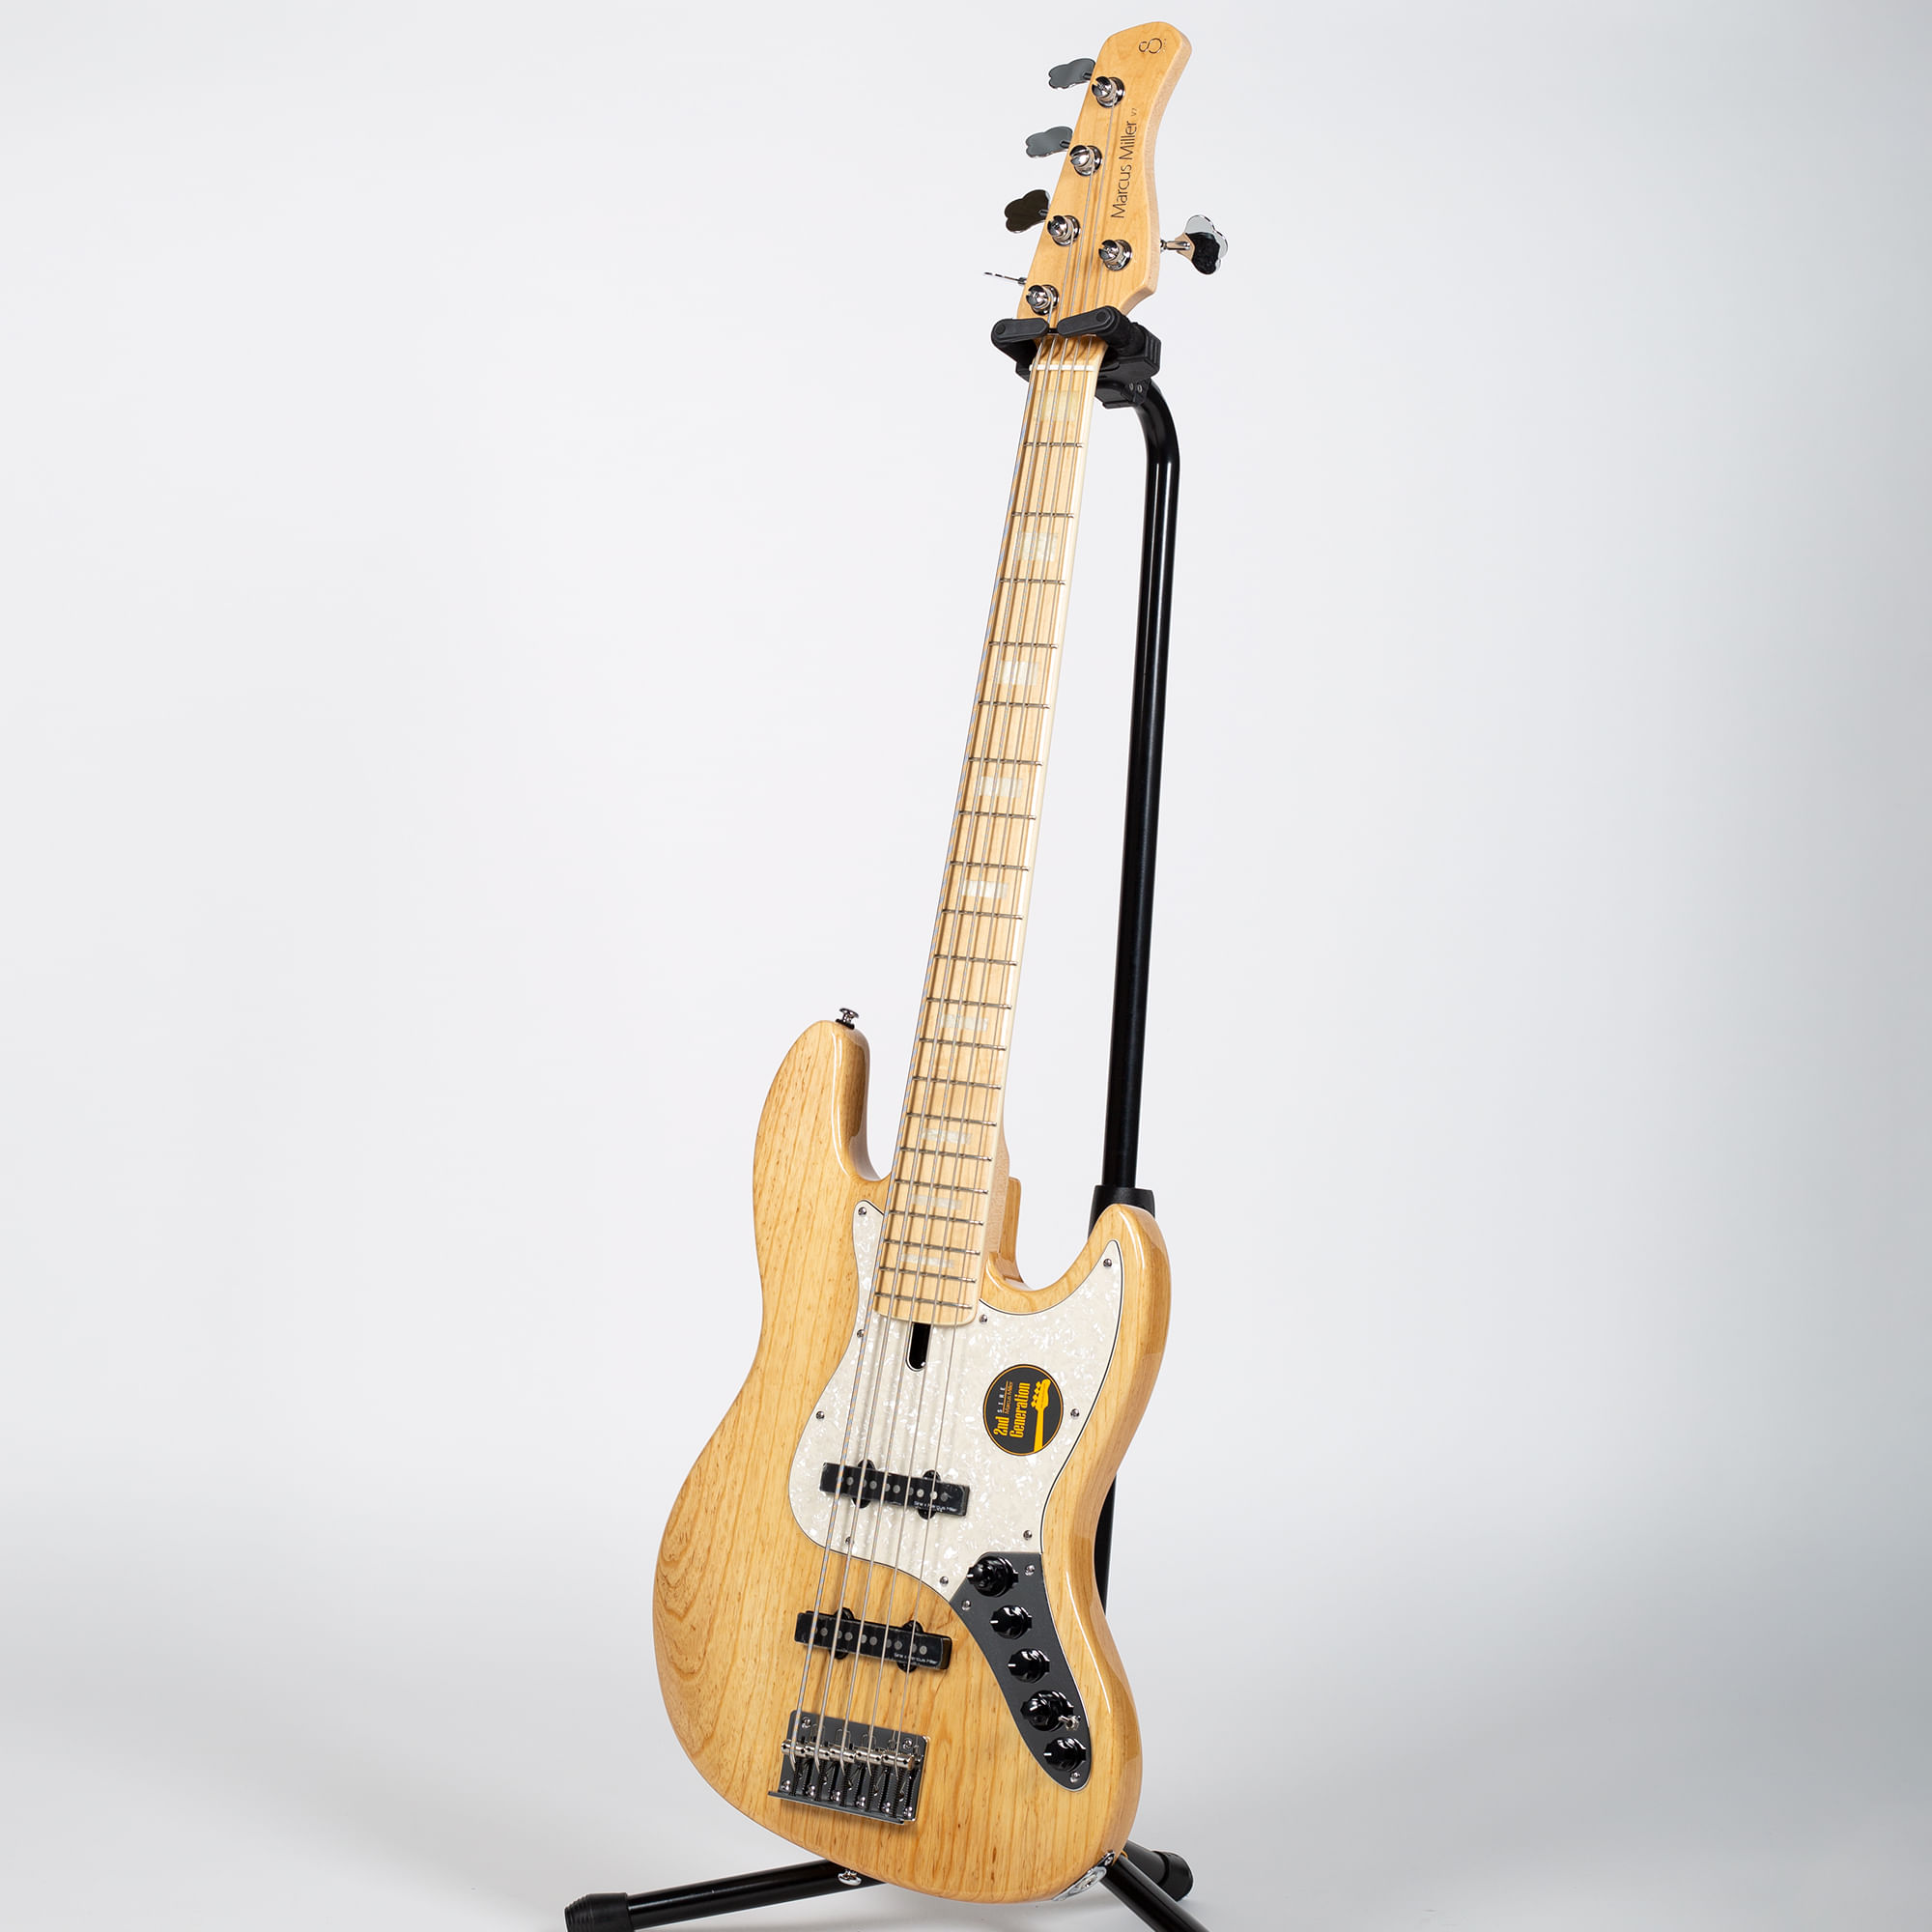 Sire Marcus Miller V7 2nd Generation 5-String Bass Guitar - Swamp Ash,  Natural